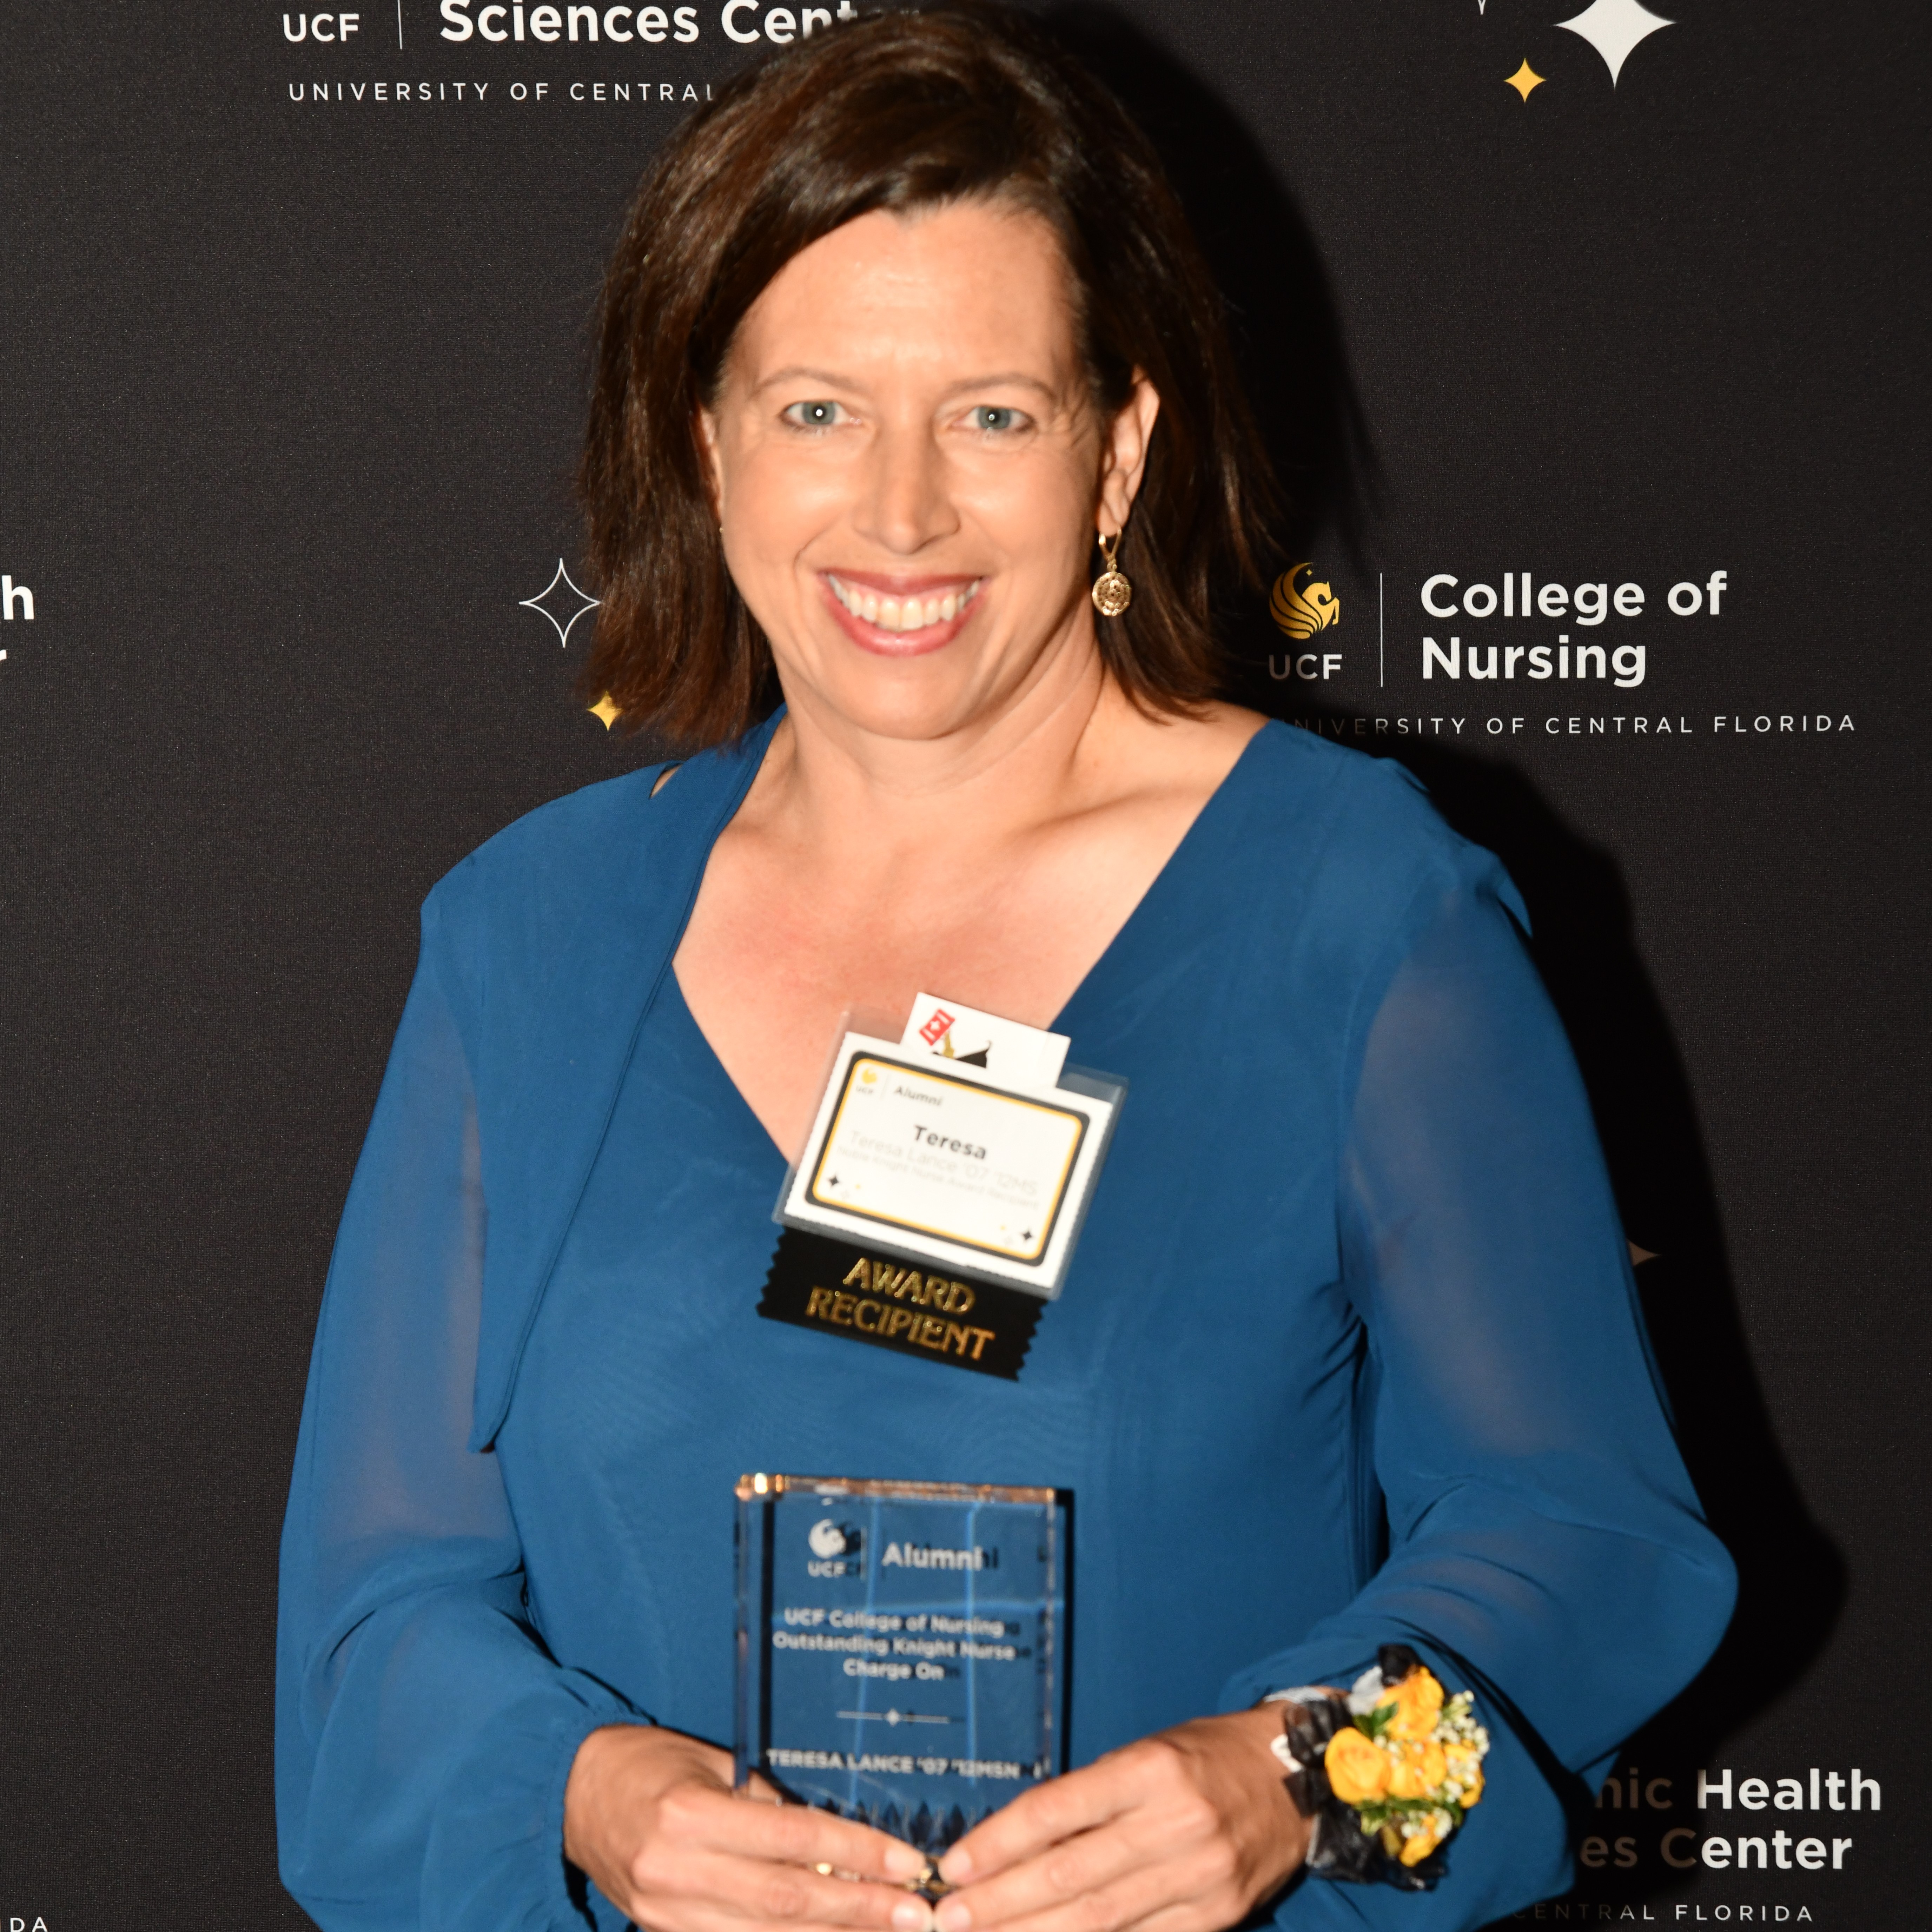 Teresa Lance, Outstanding Knight Nurse Awardee